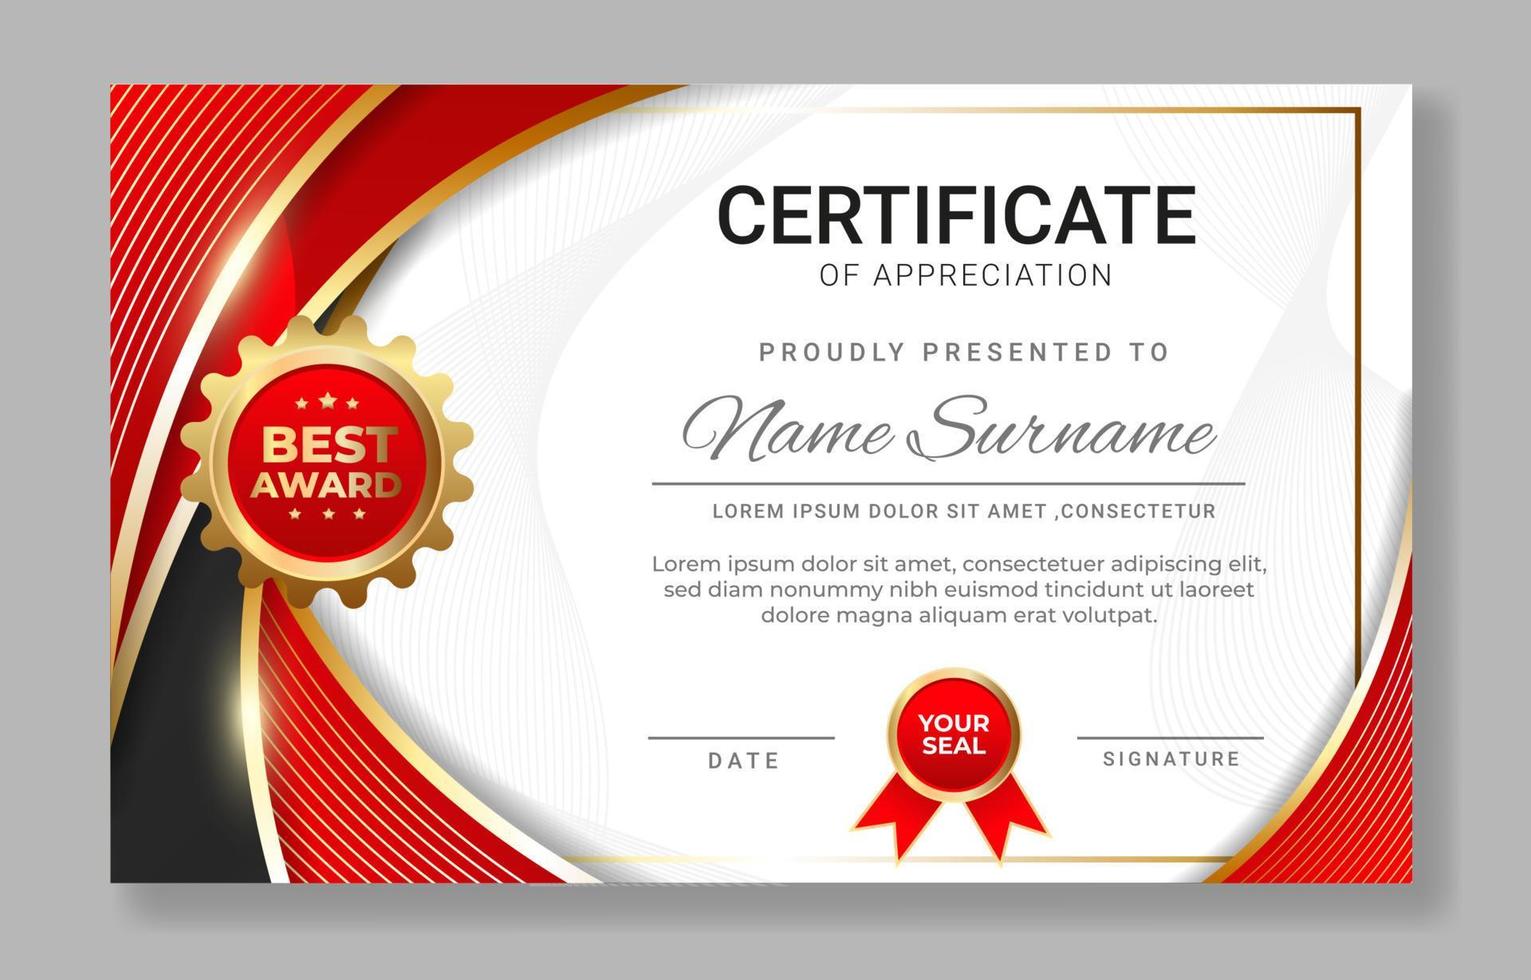 Red Certificate of Appreciation Template vector